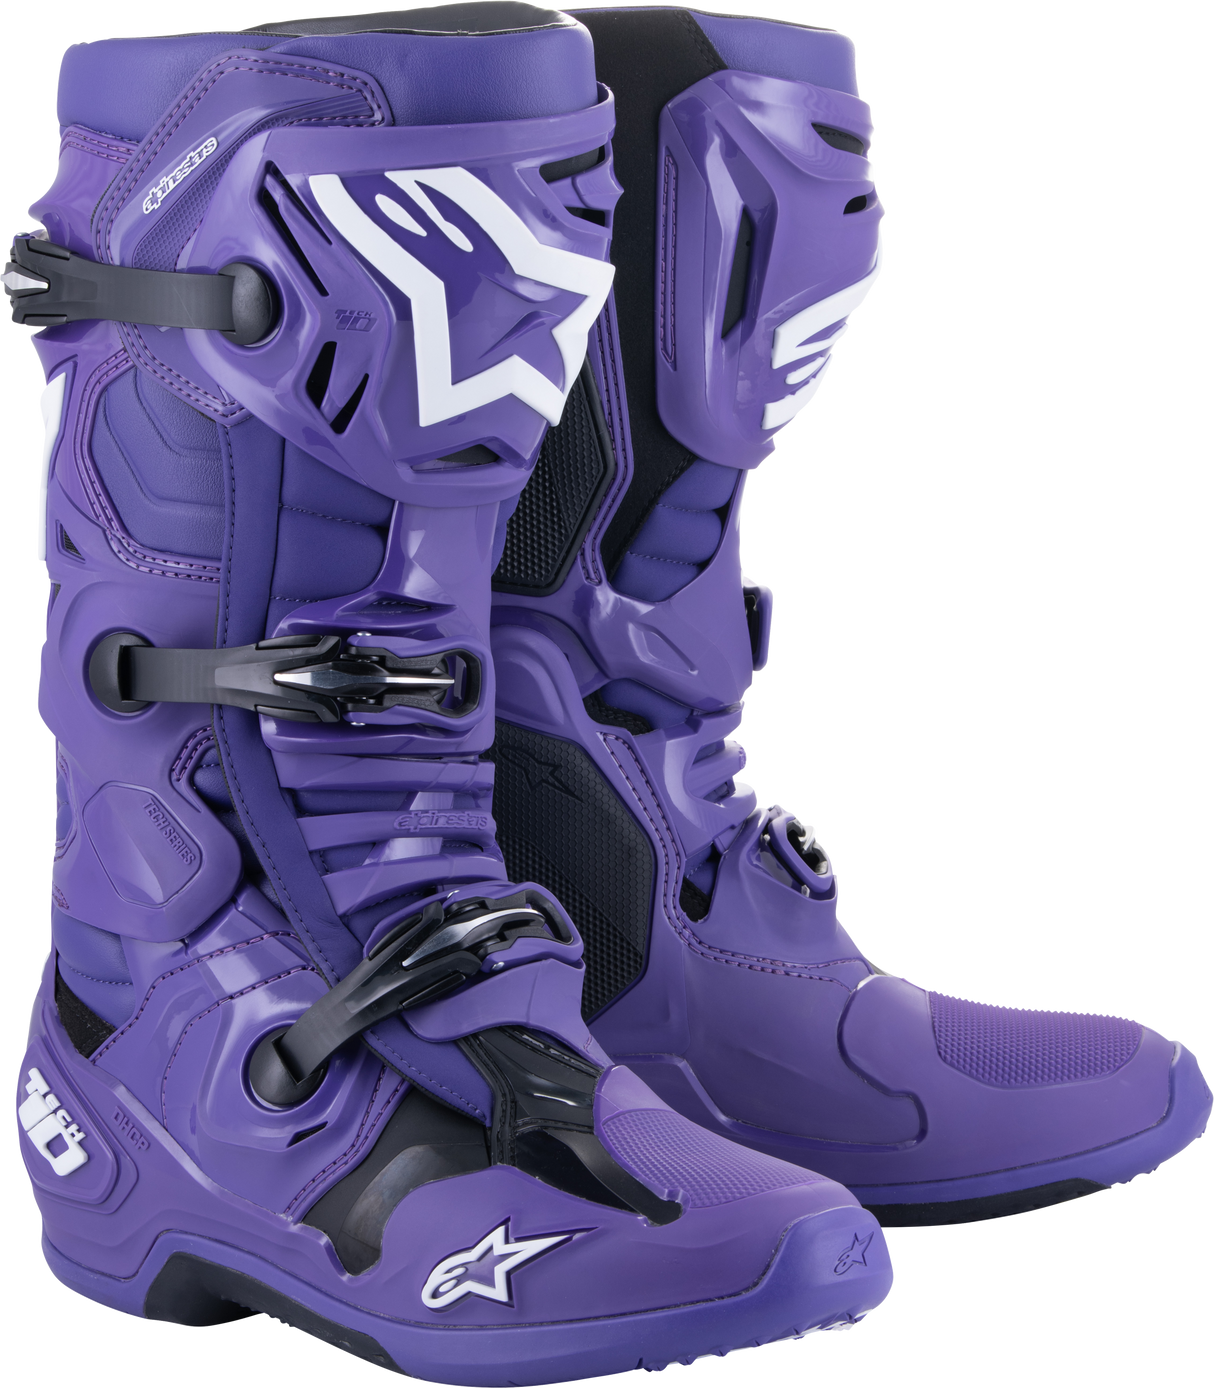 Tech 10 Boots Ultraviolet Black Sz 11